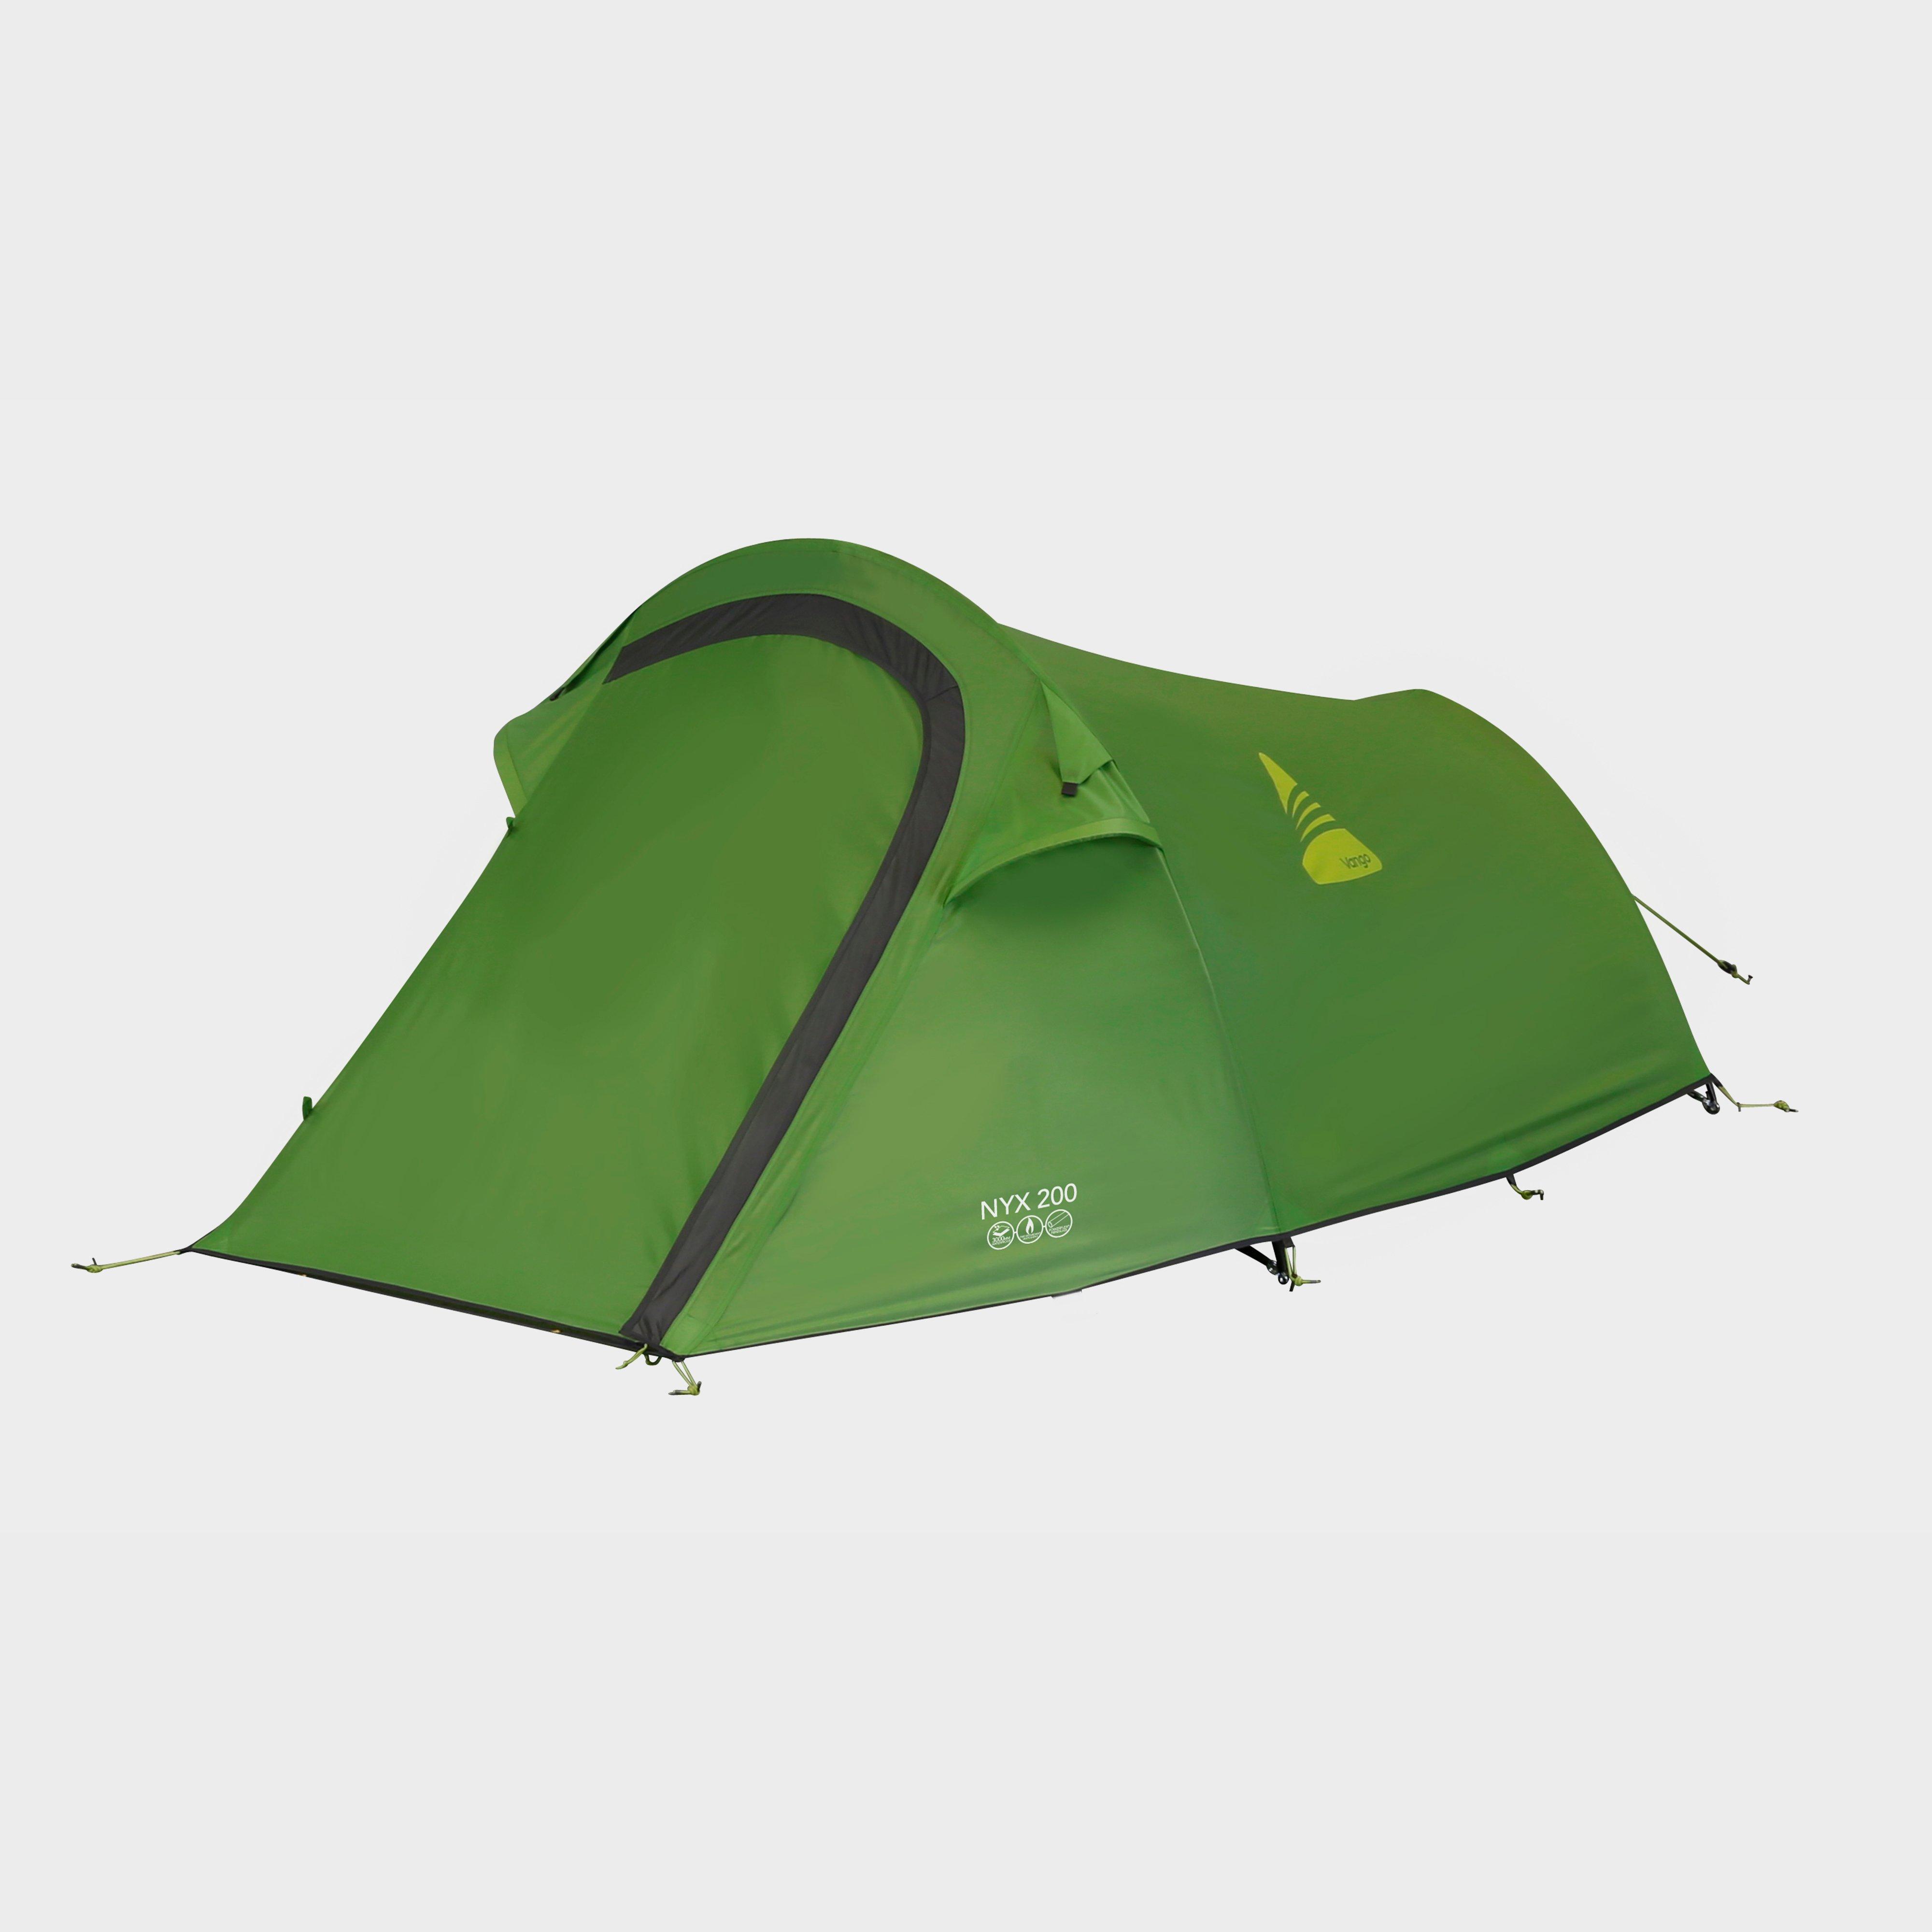 Nyx 200 Tent - Green